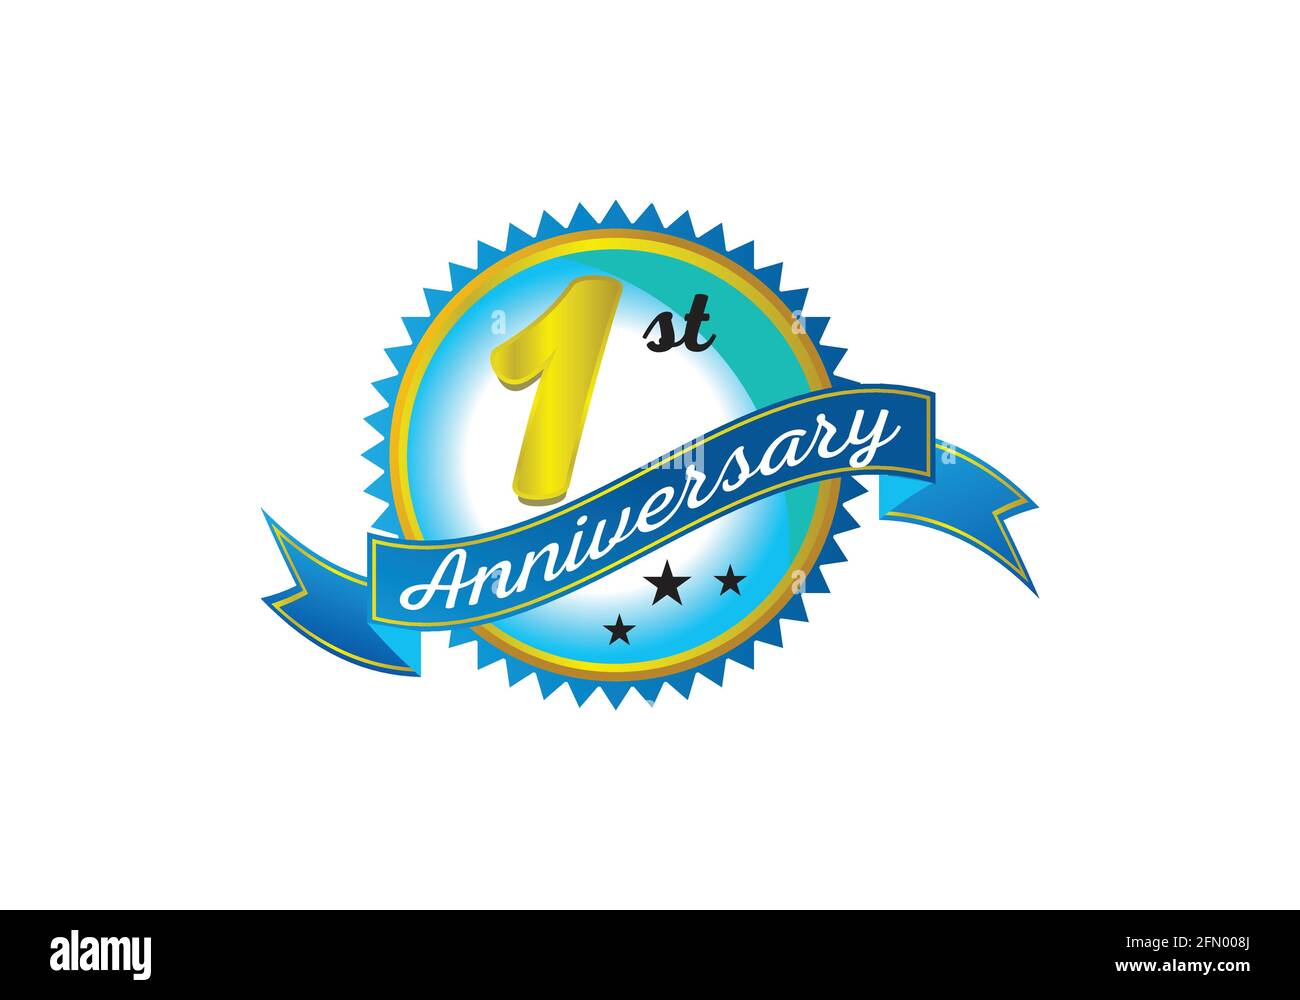 1st anniversary logo design vector template Stock Vector